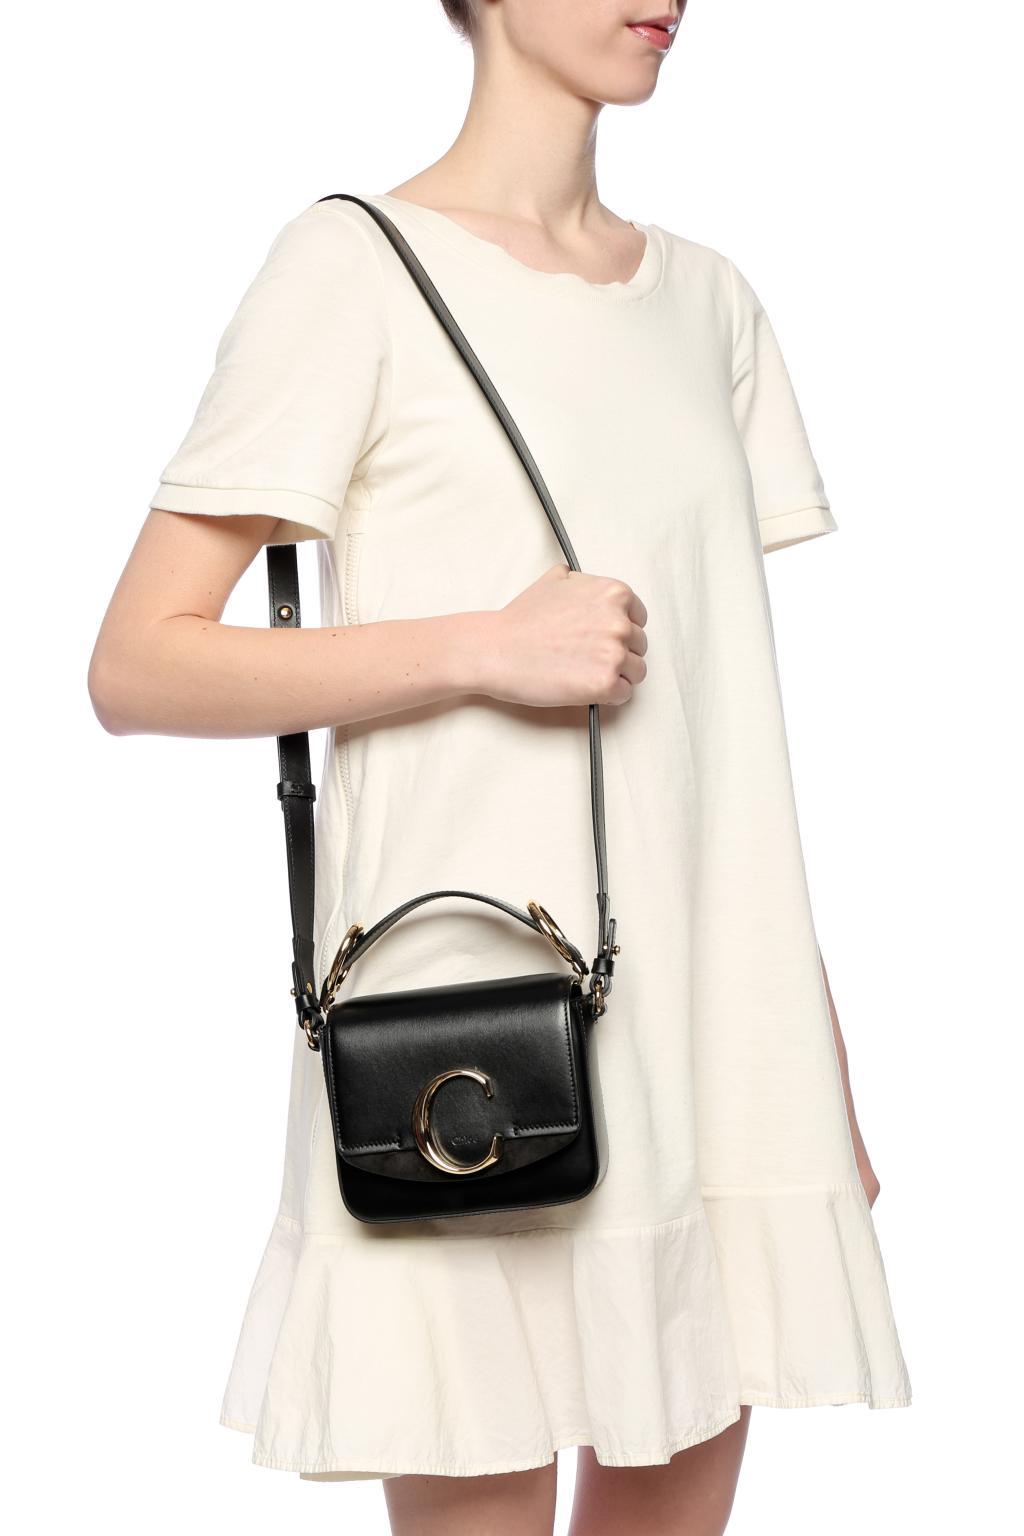 Chloé 'chloé C' Mini Leather Top Handle Bag in Black | Lyst